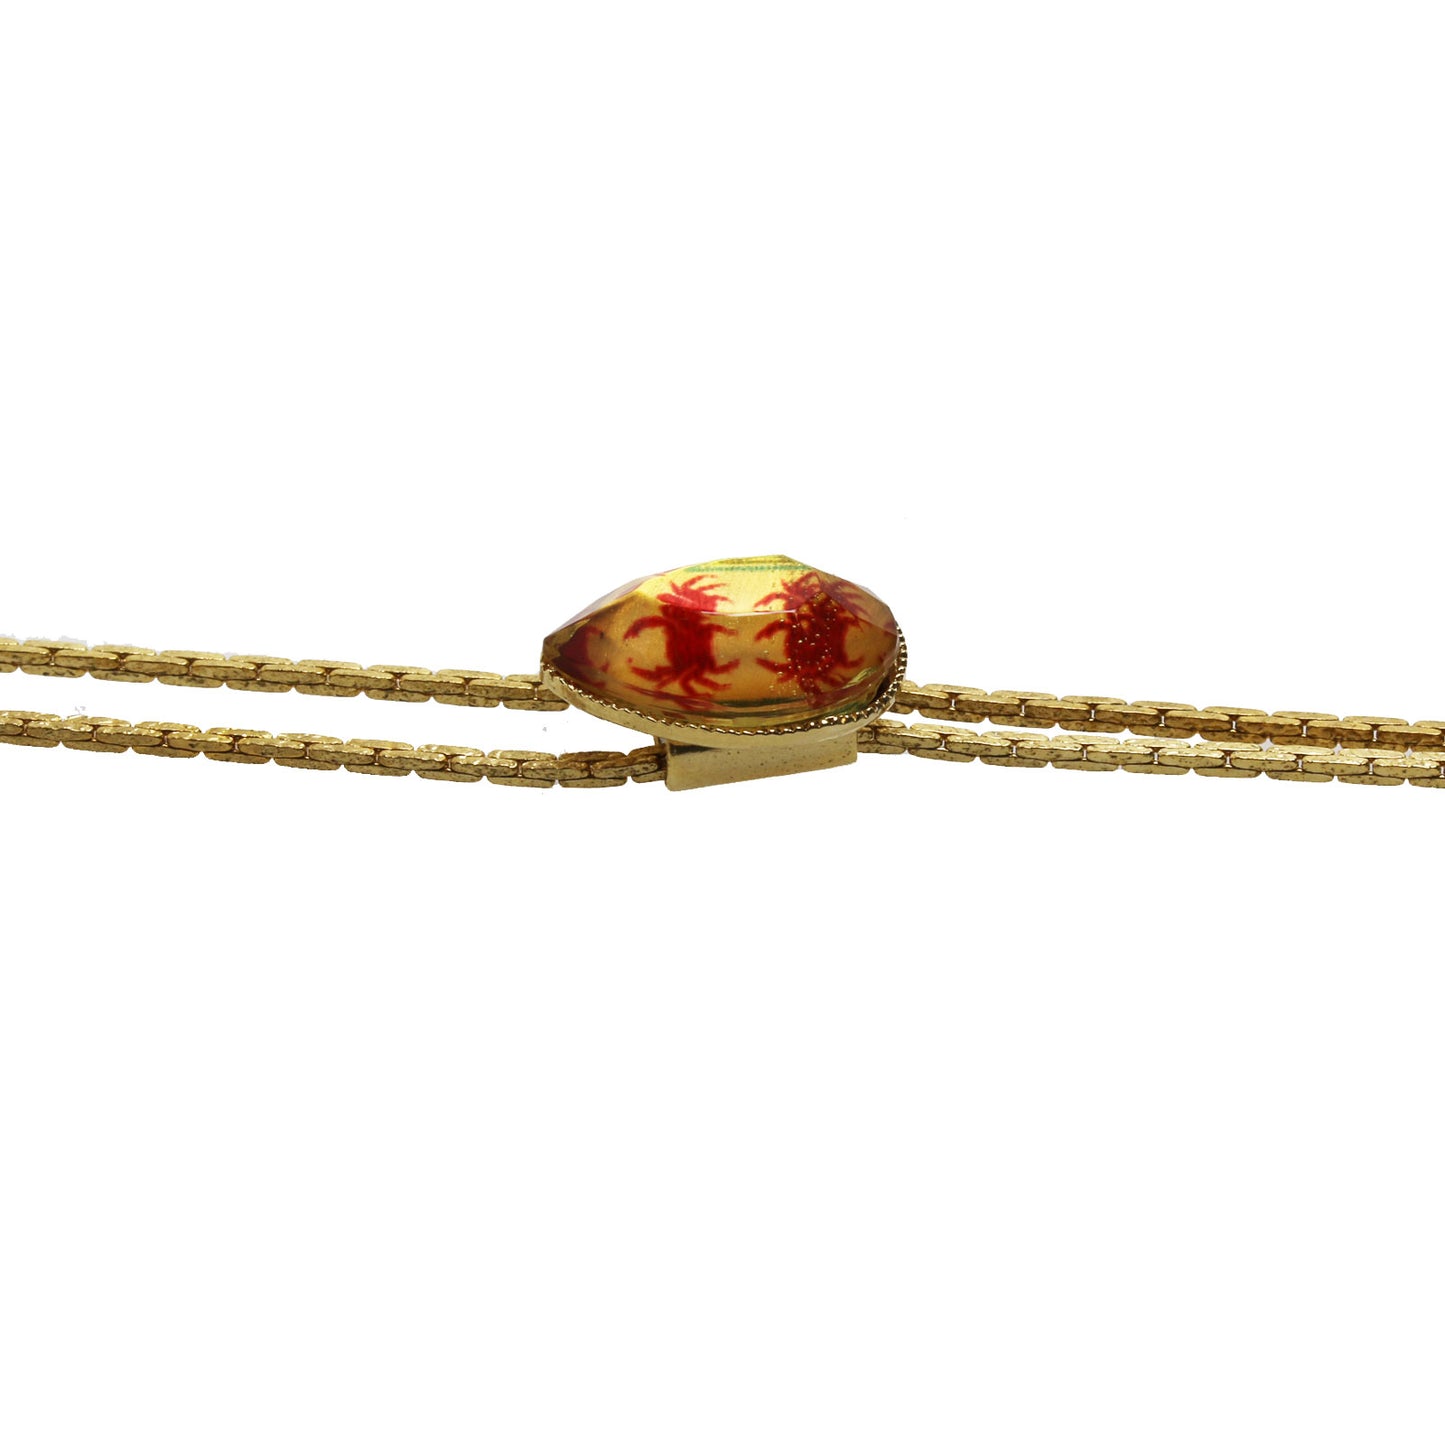 Red Crab Necklace Chain Bolo Tie TAMARUSAN